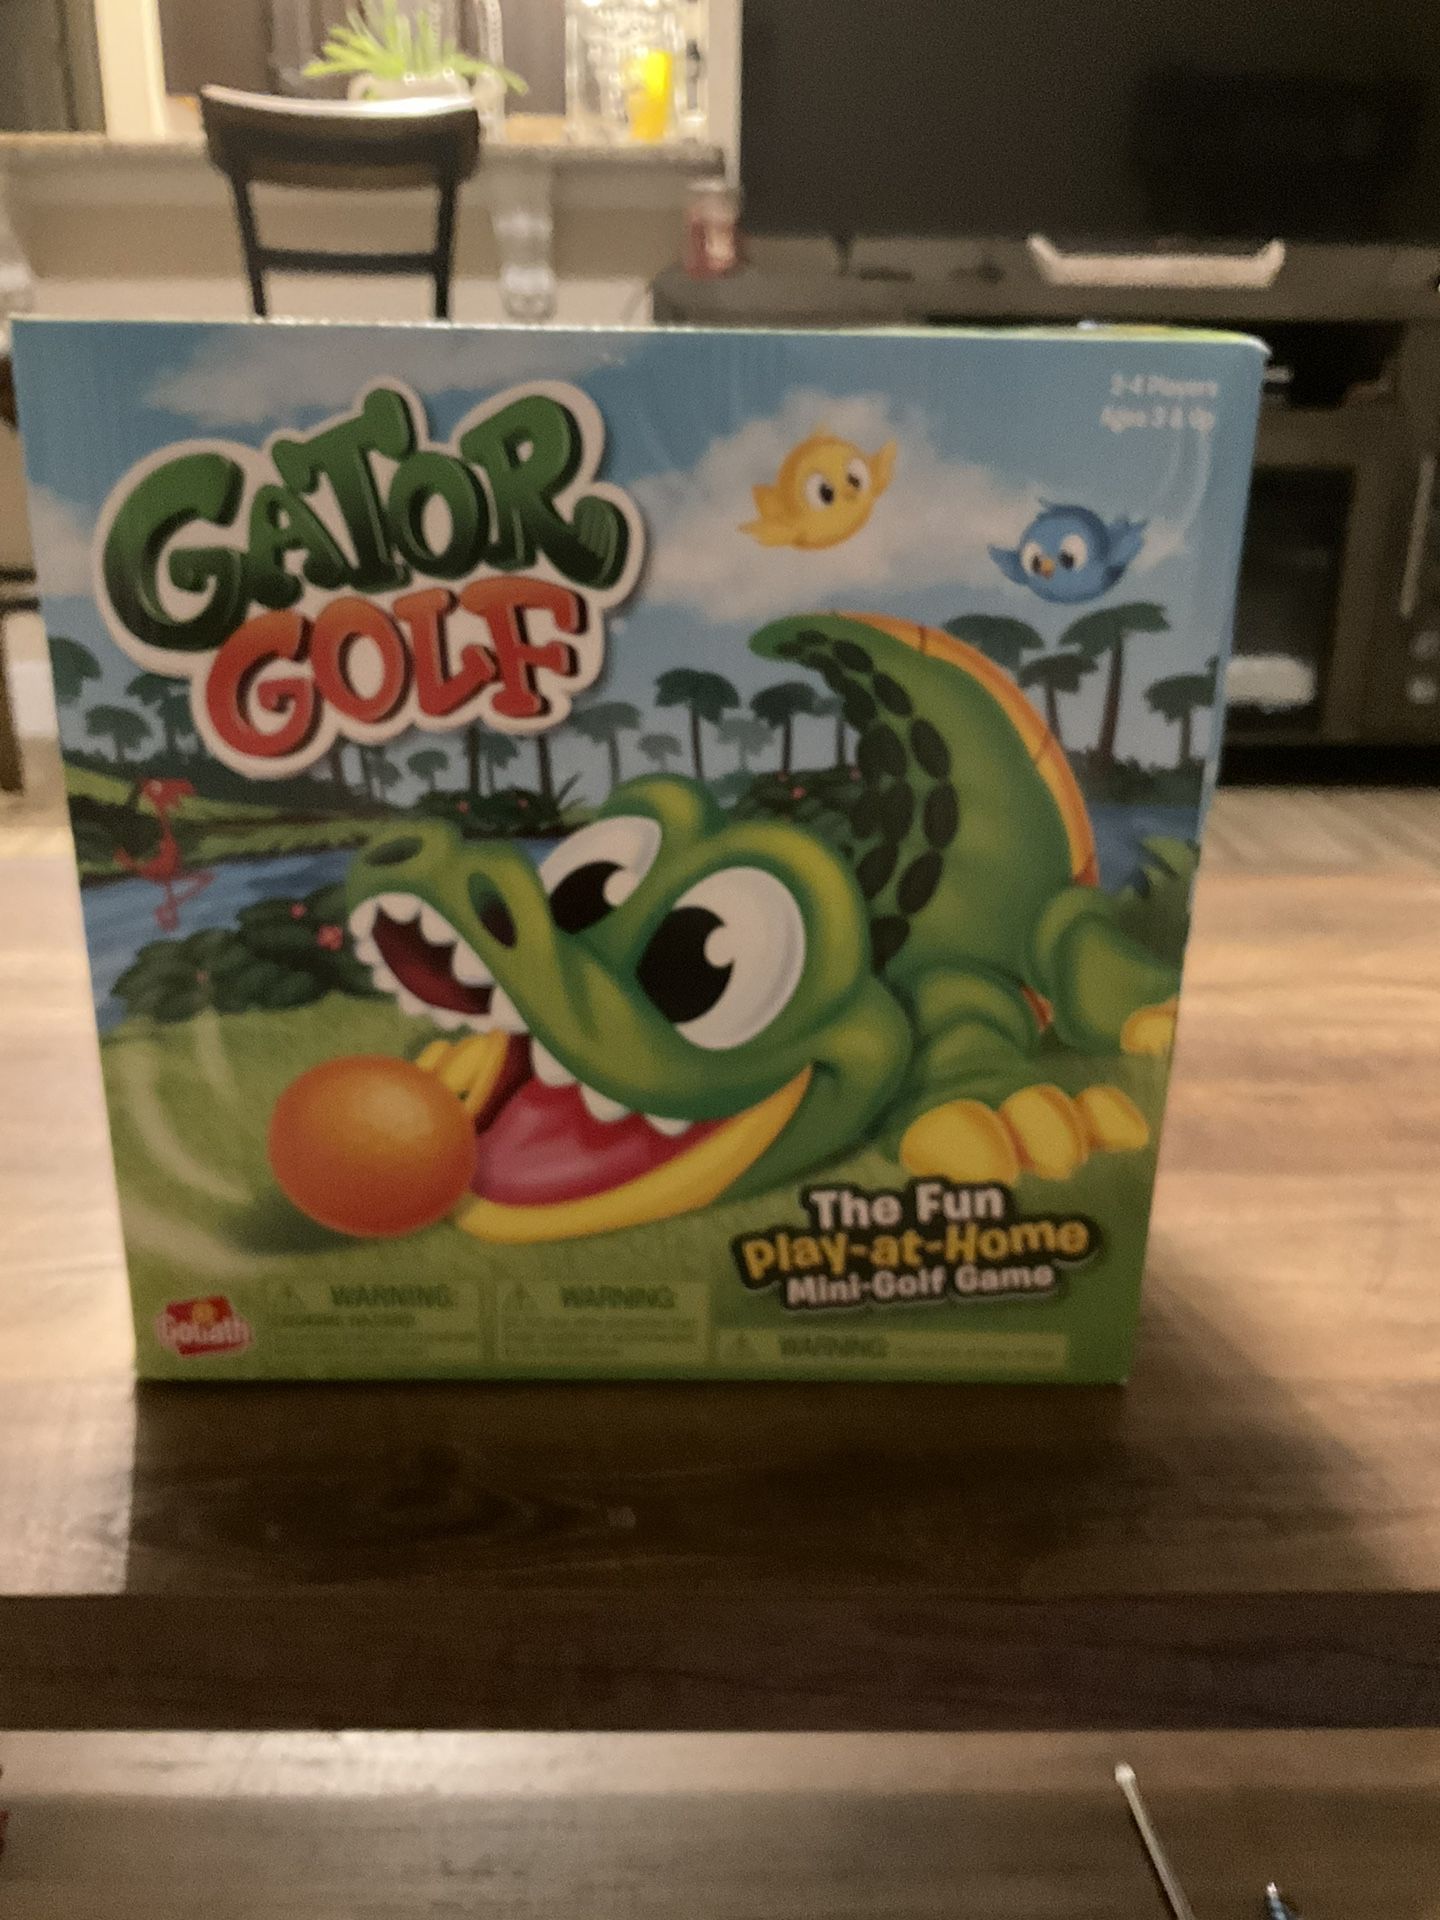 Goliath Games Gator Golf, Mini Golf Game